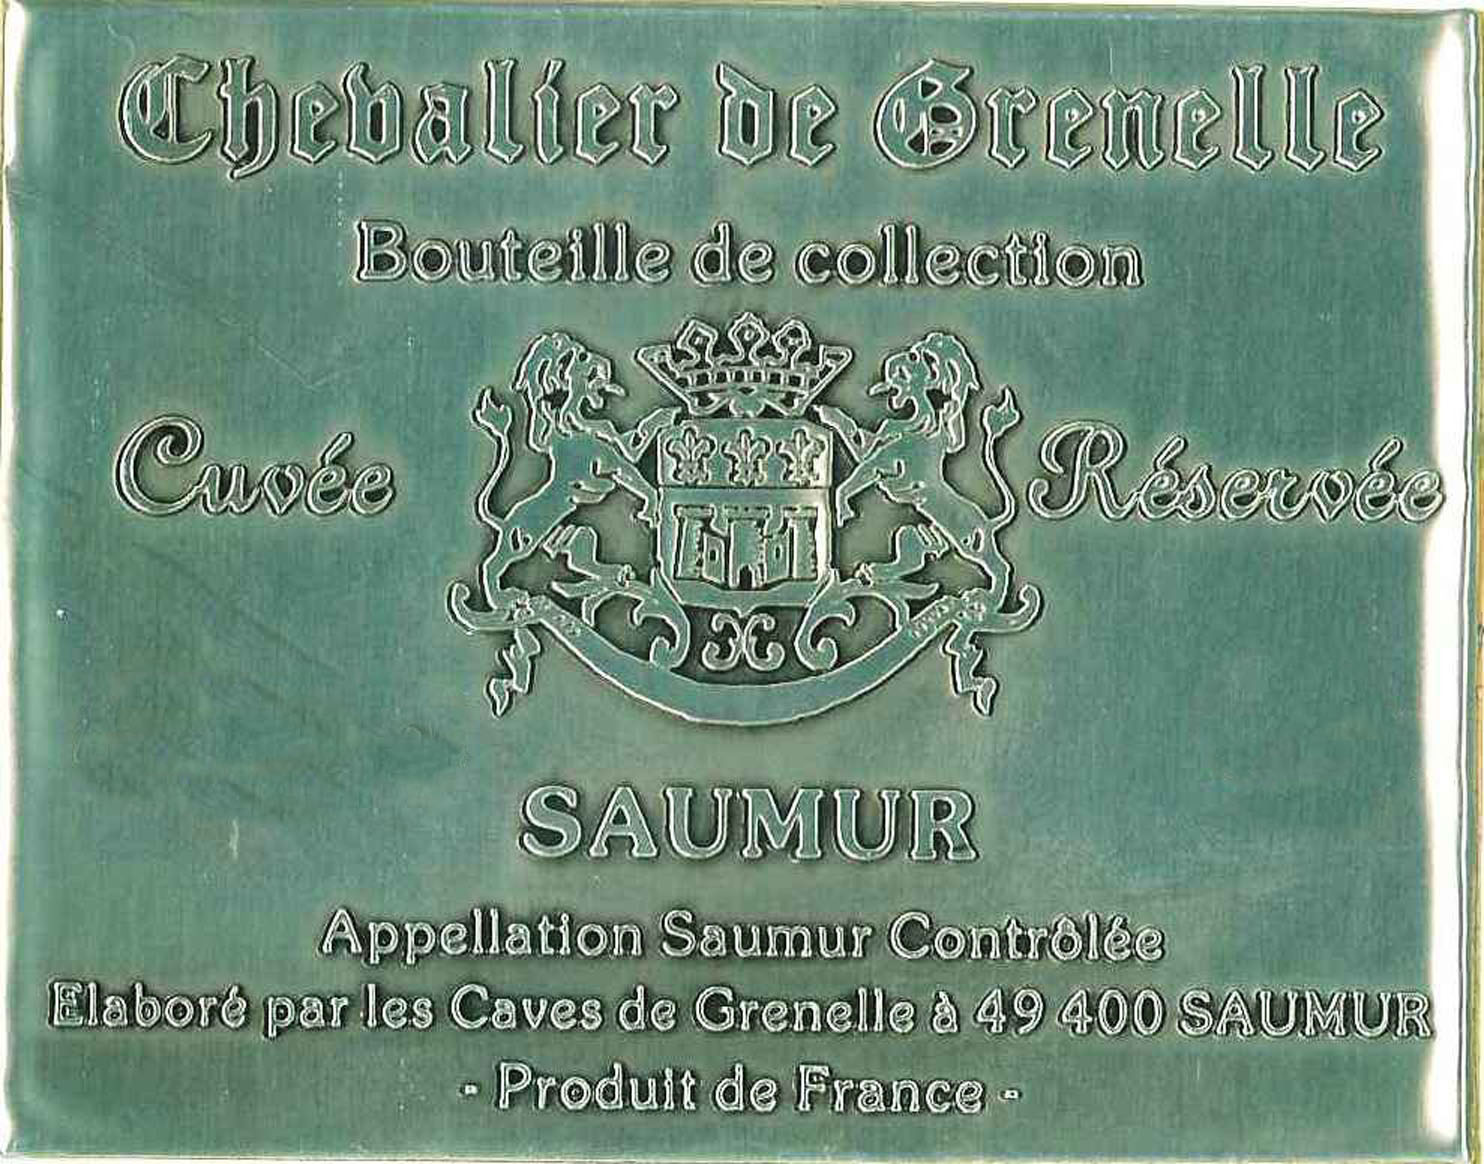 Chevalier de Grenelle - Cuvee Reserve label